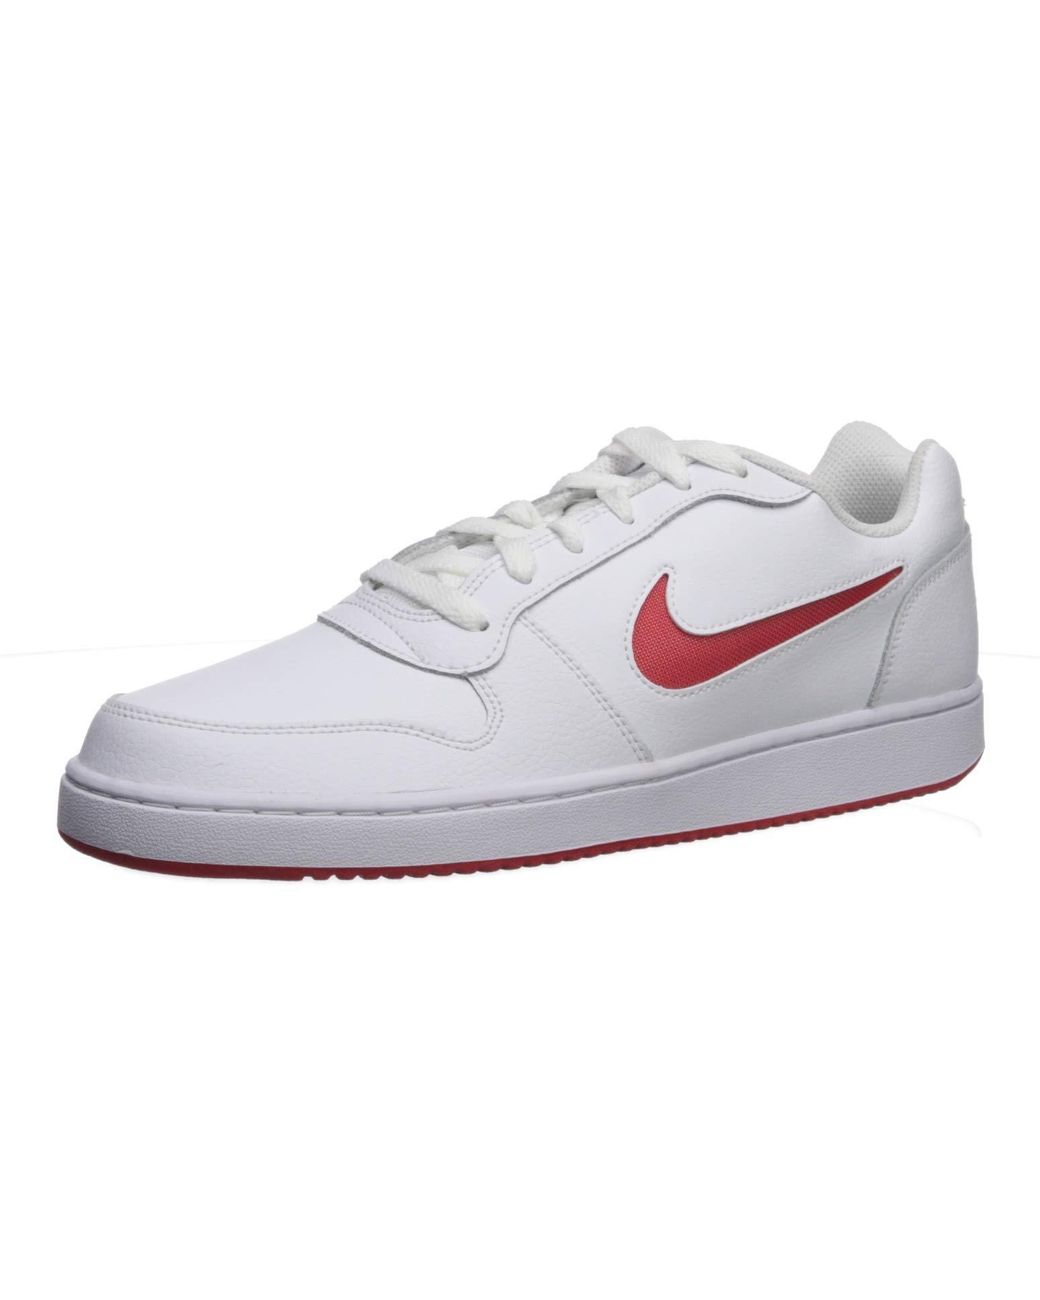 Nike Synthetic Ebernon Low Sneaker in White/University Red (White) for Men  - Lyst